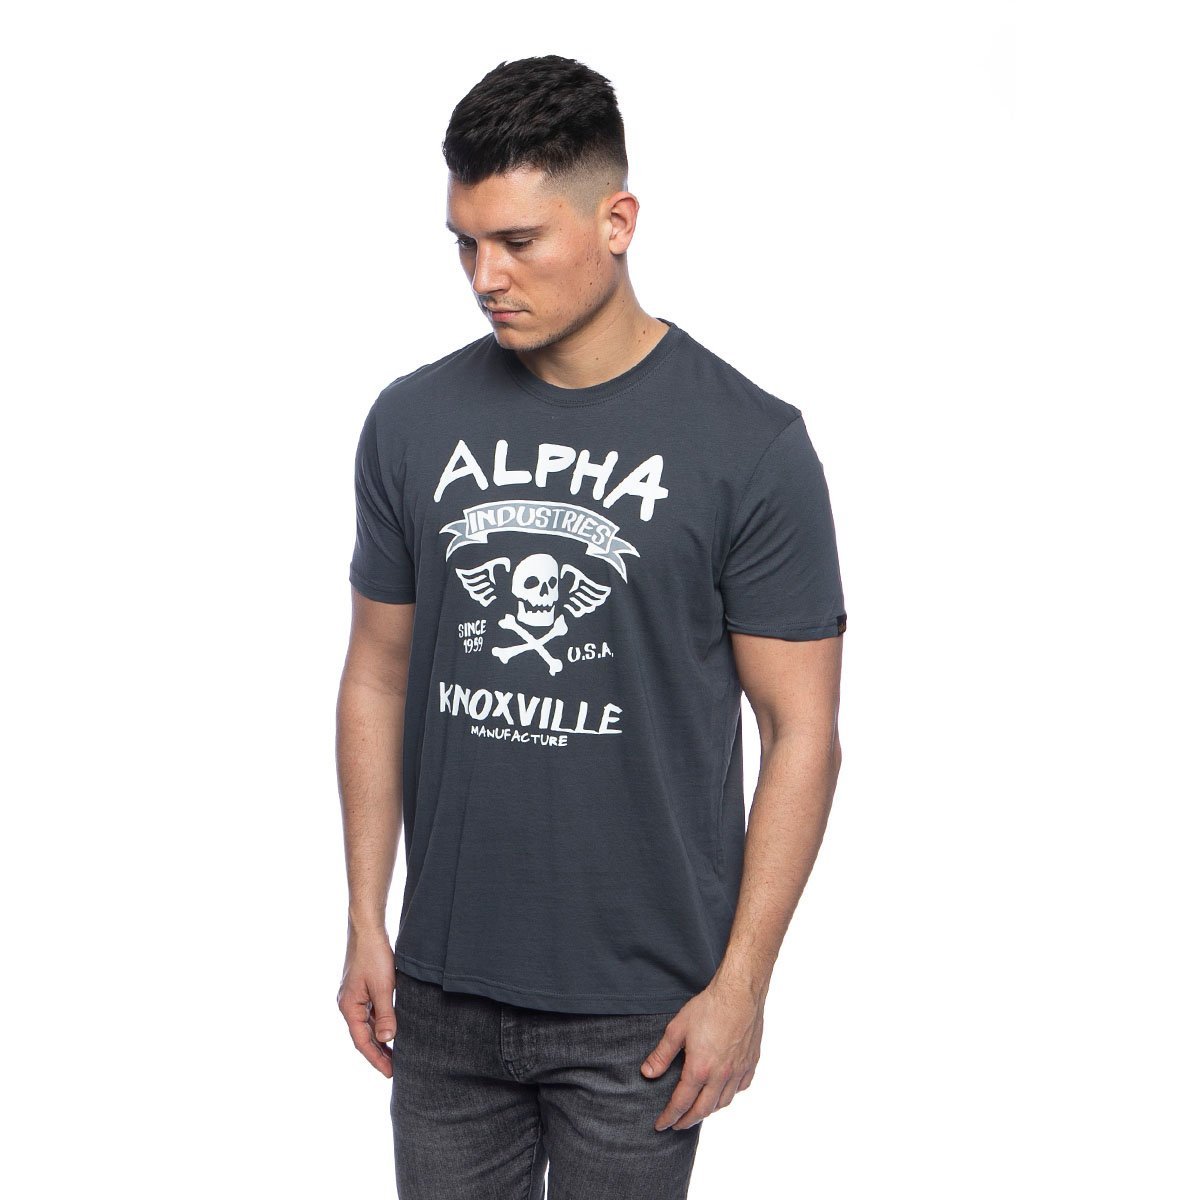 Alpha Skull grey/black T-shirt T Industries